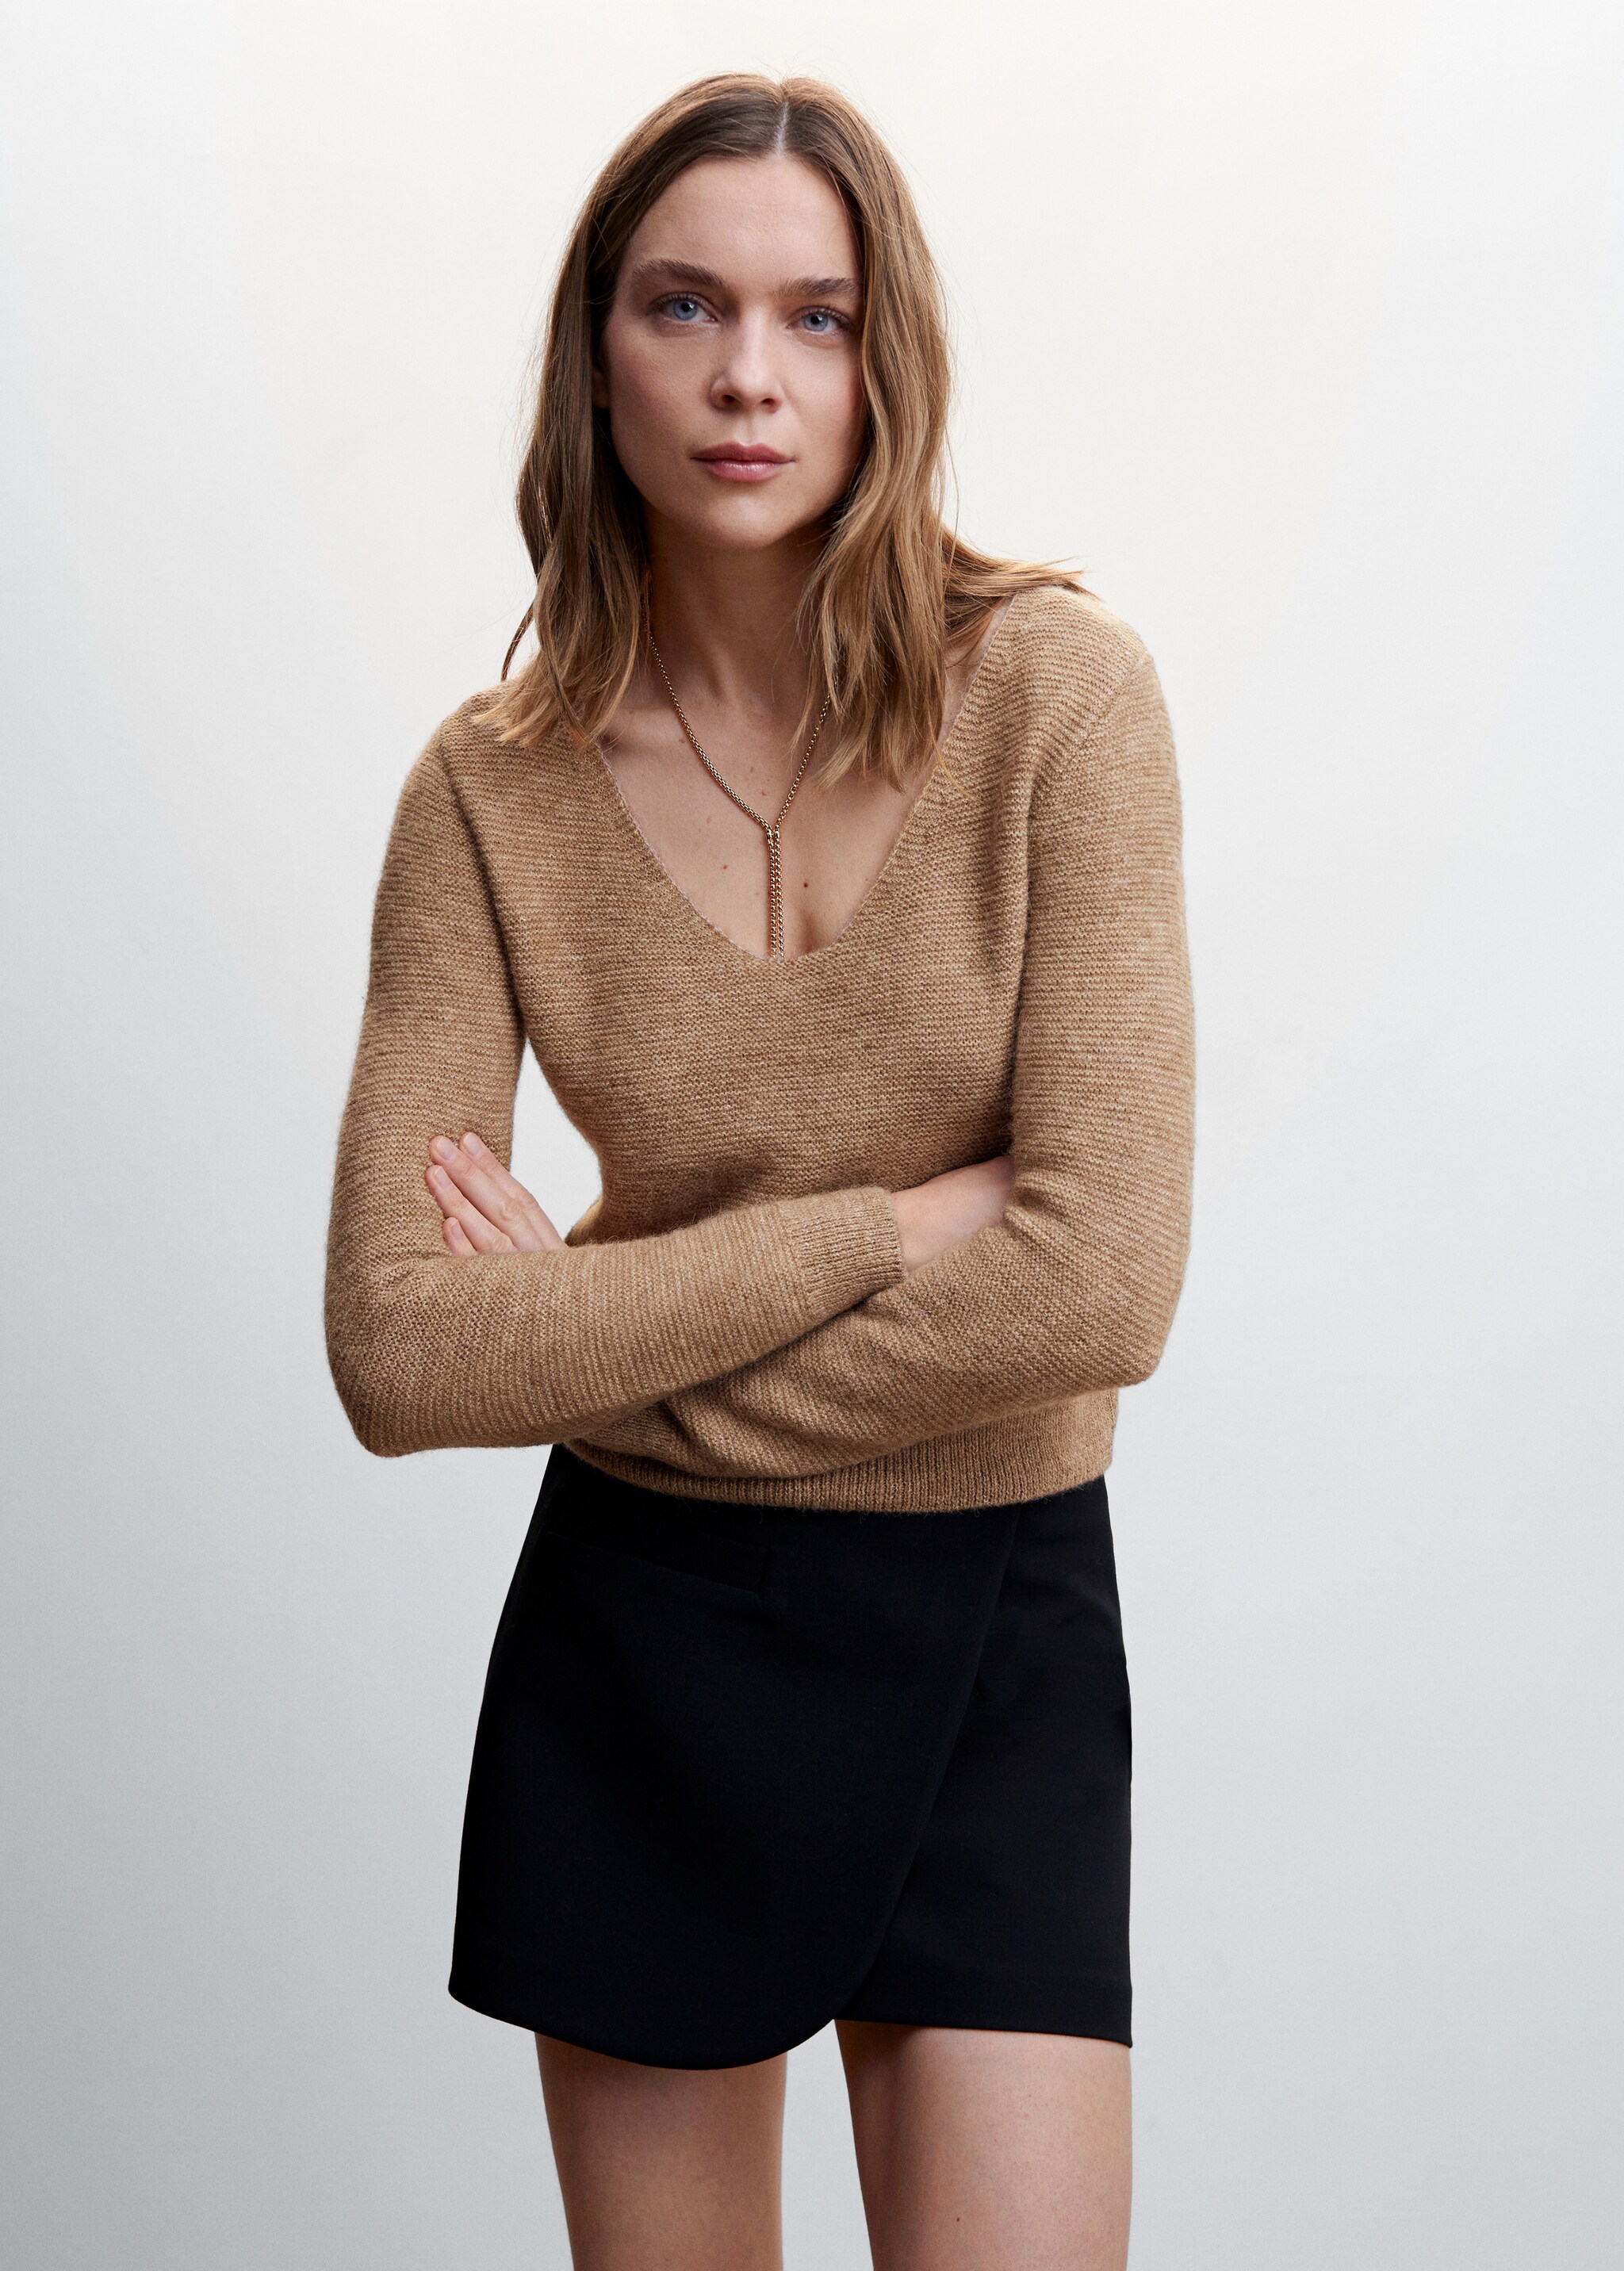 Reverse knit sweater - Plan mediu